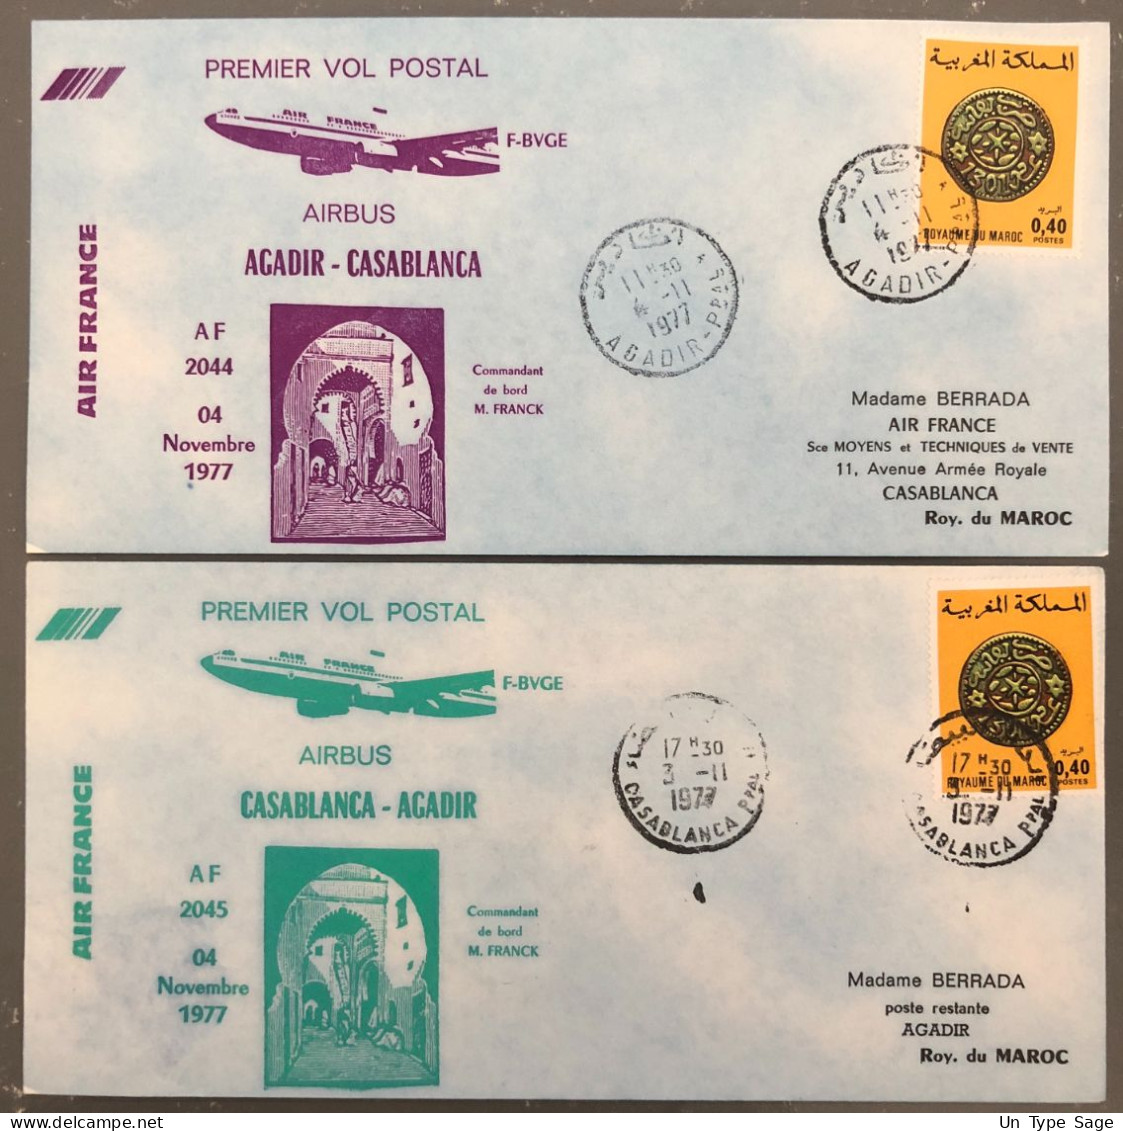 France, Premier Vol (Air France) Casablanca, Agdir, 4.11.1977 - 2 Enveloppes - (B1493) - Primeros Vuelos